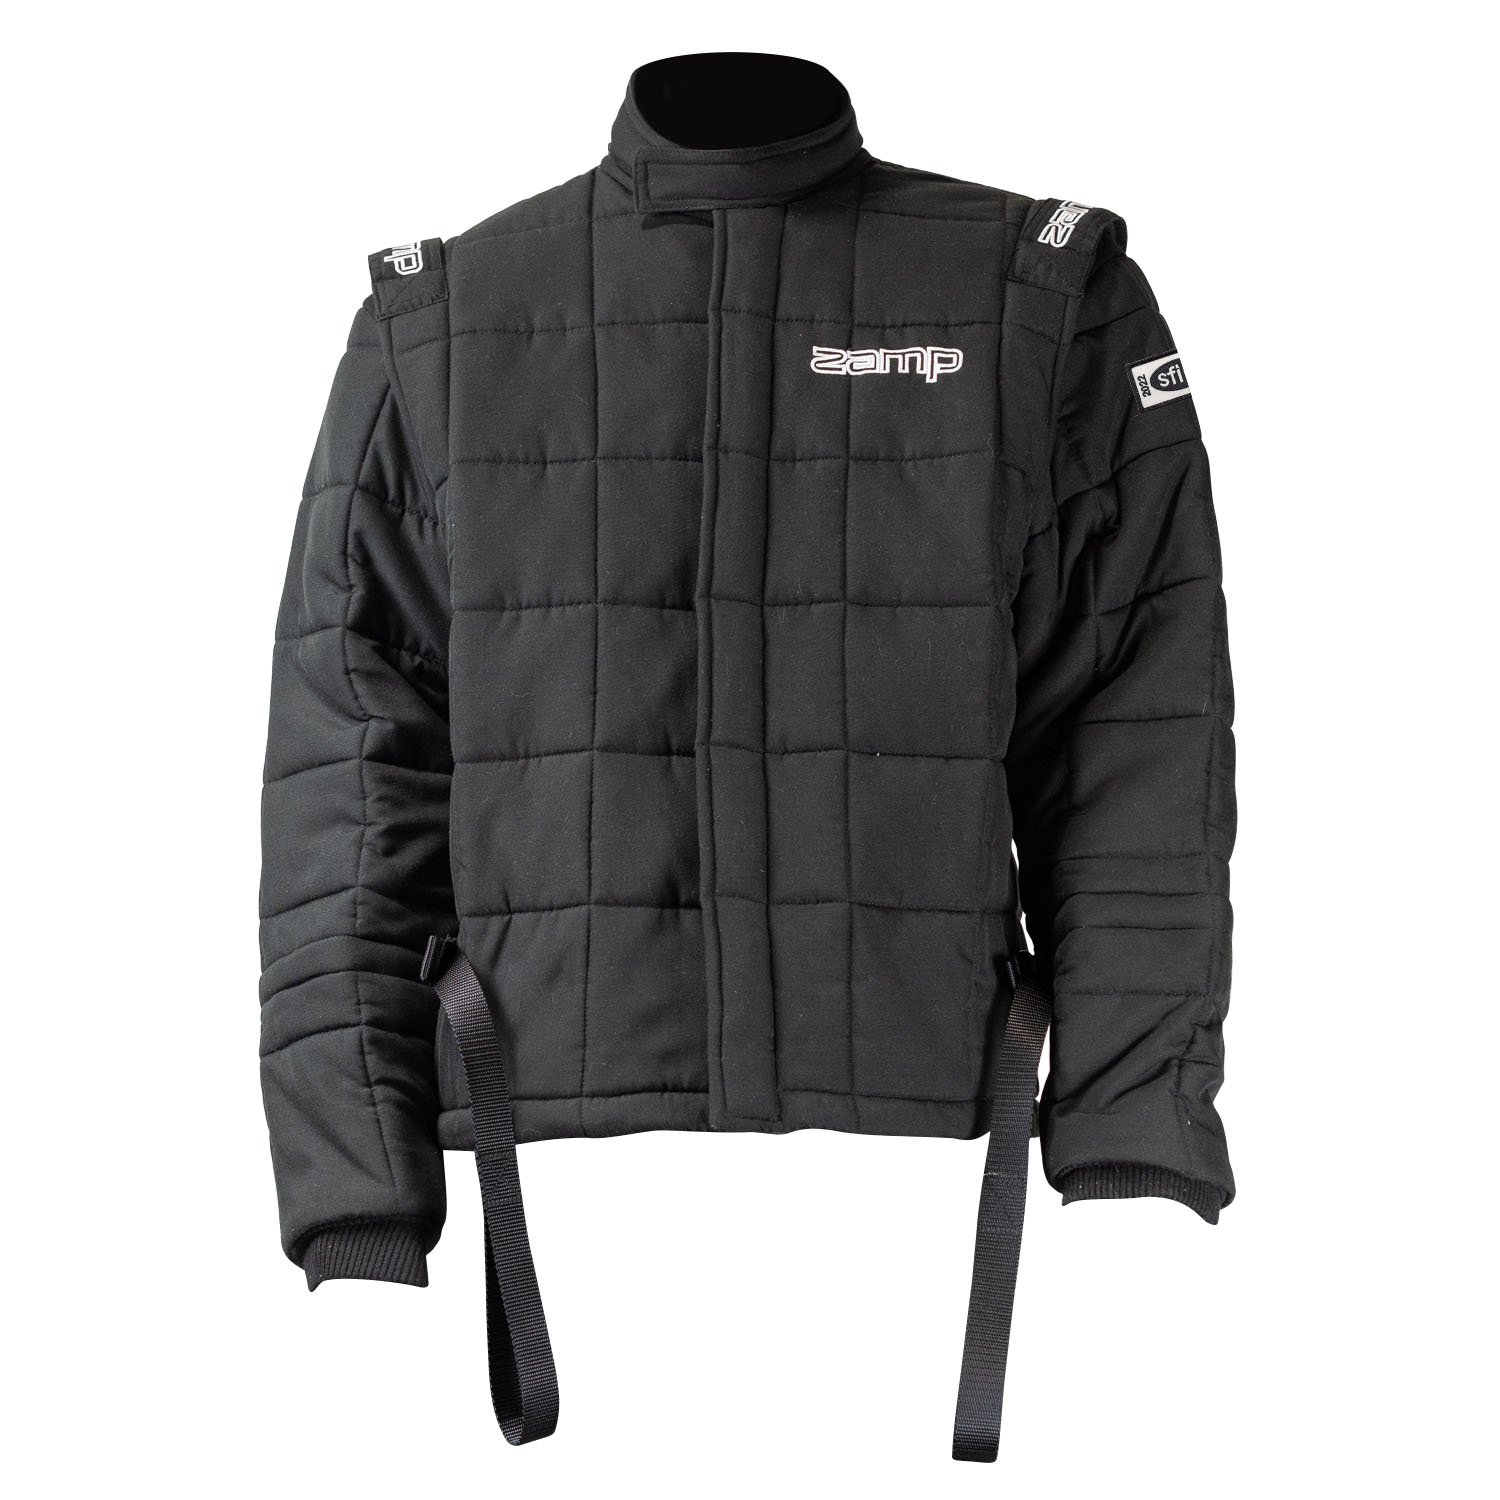 ZR-Drag Jacket Black XL